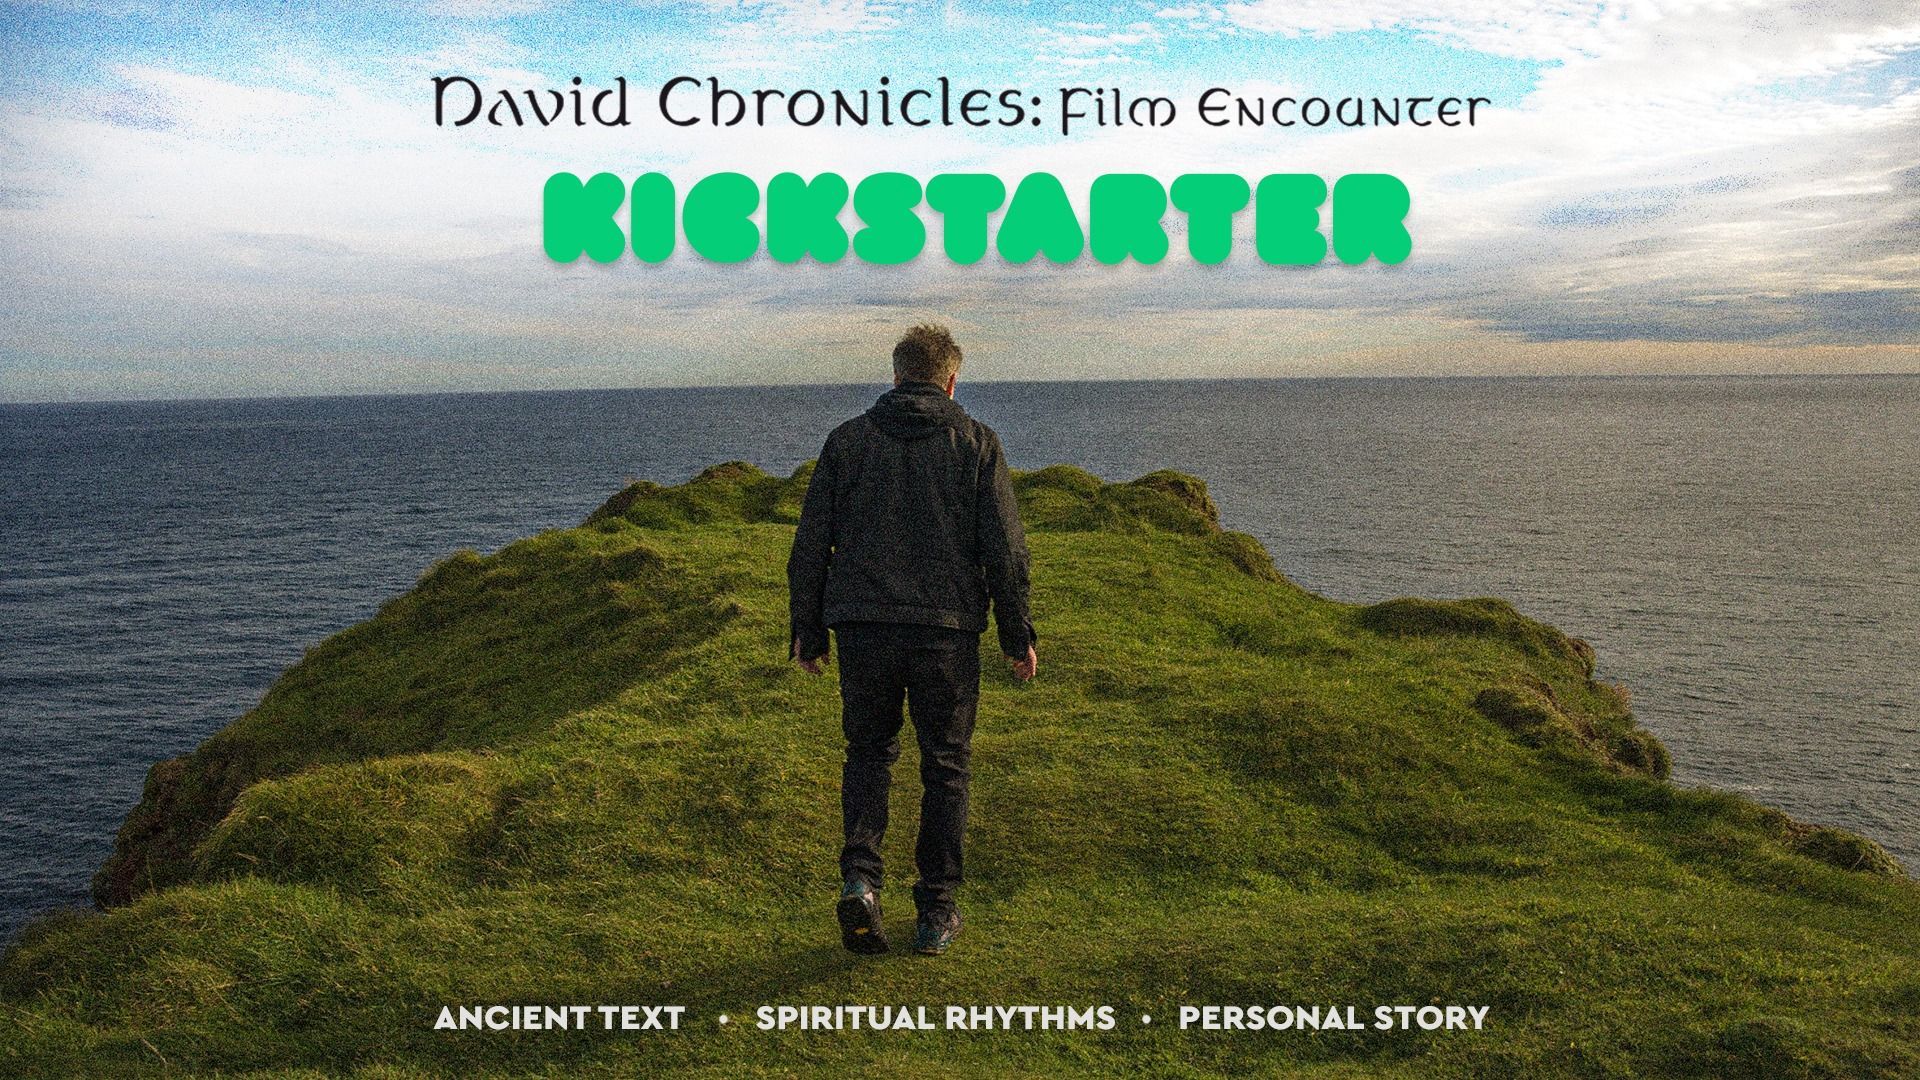 Kickstarter - David Chronicles Film Encounter